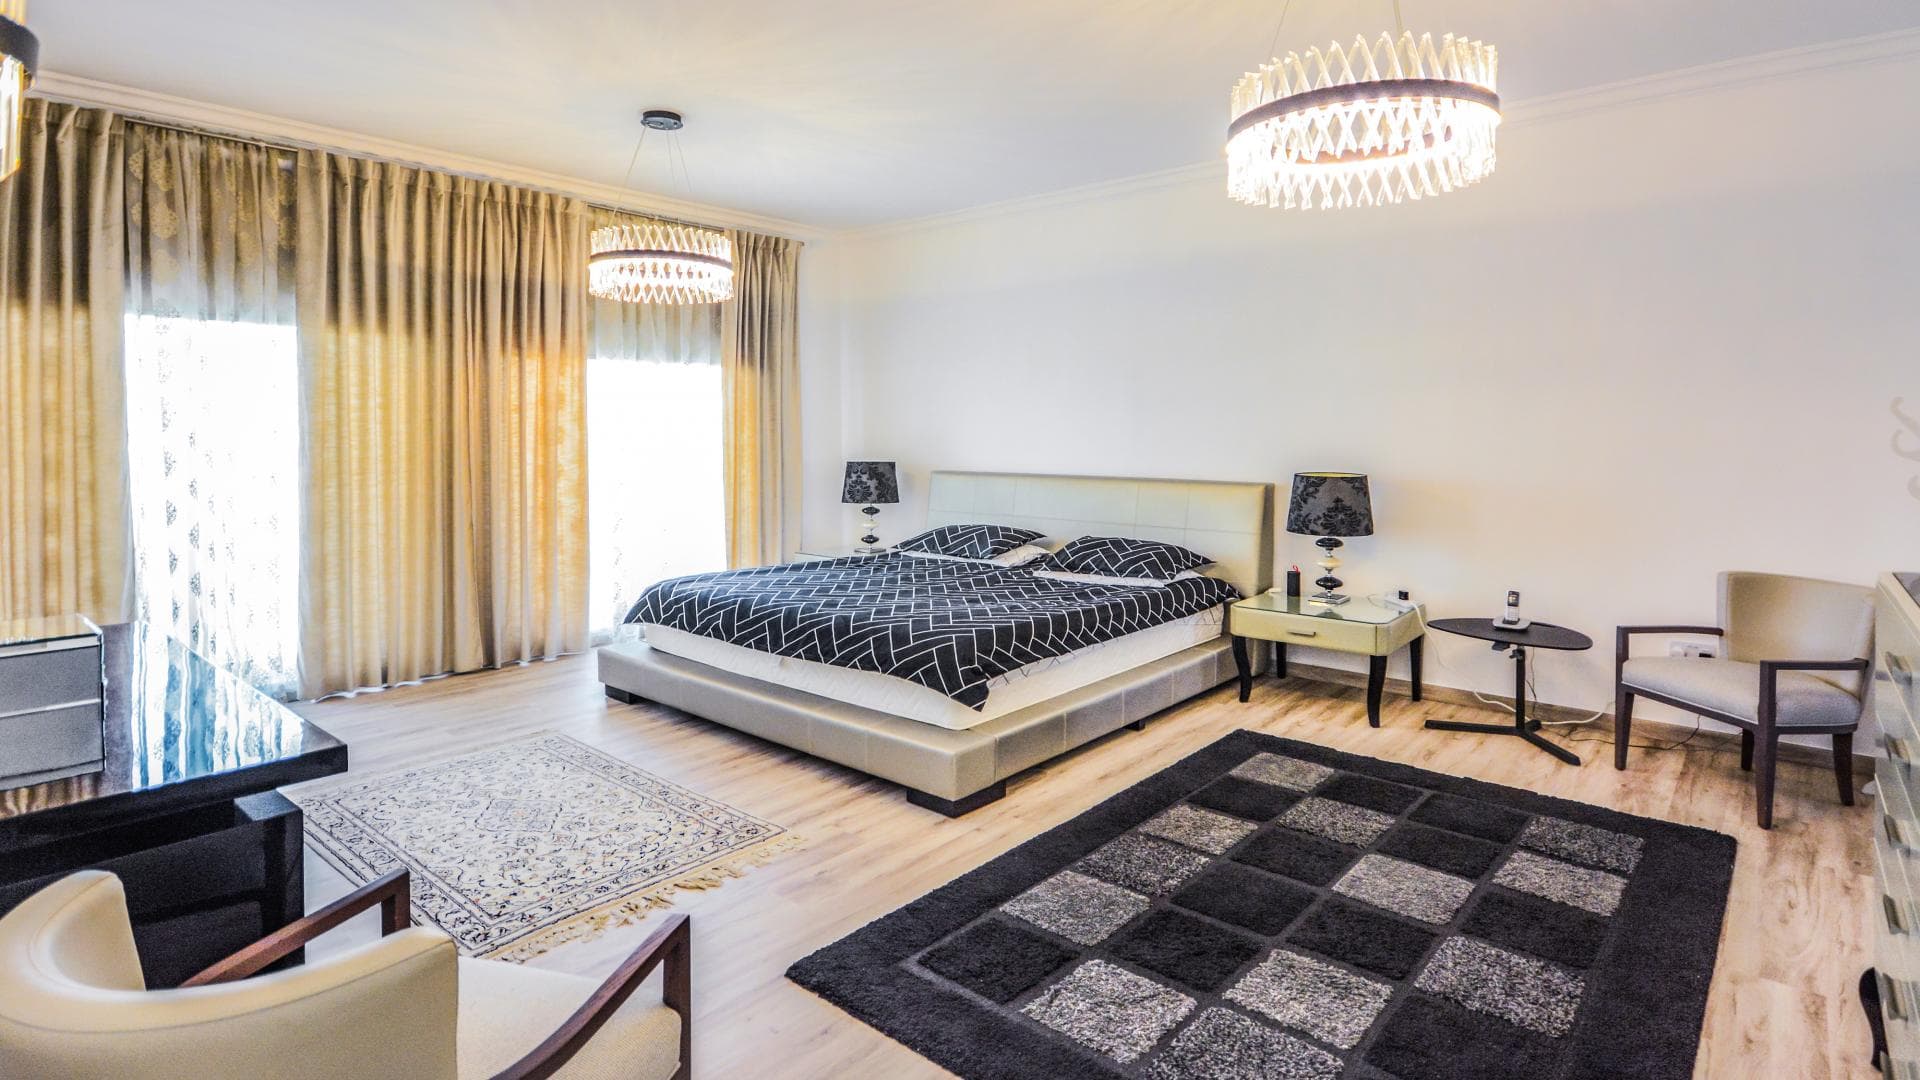 4 Bedroom Villa For Rent European Clusters Lp15271 1b6bbdedf2a27600.jpg